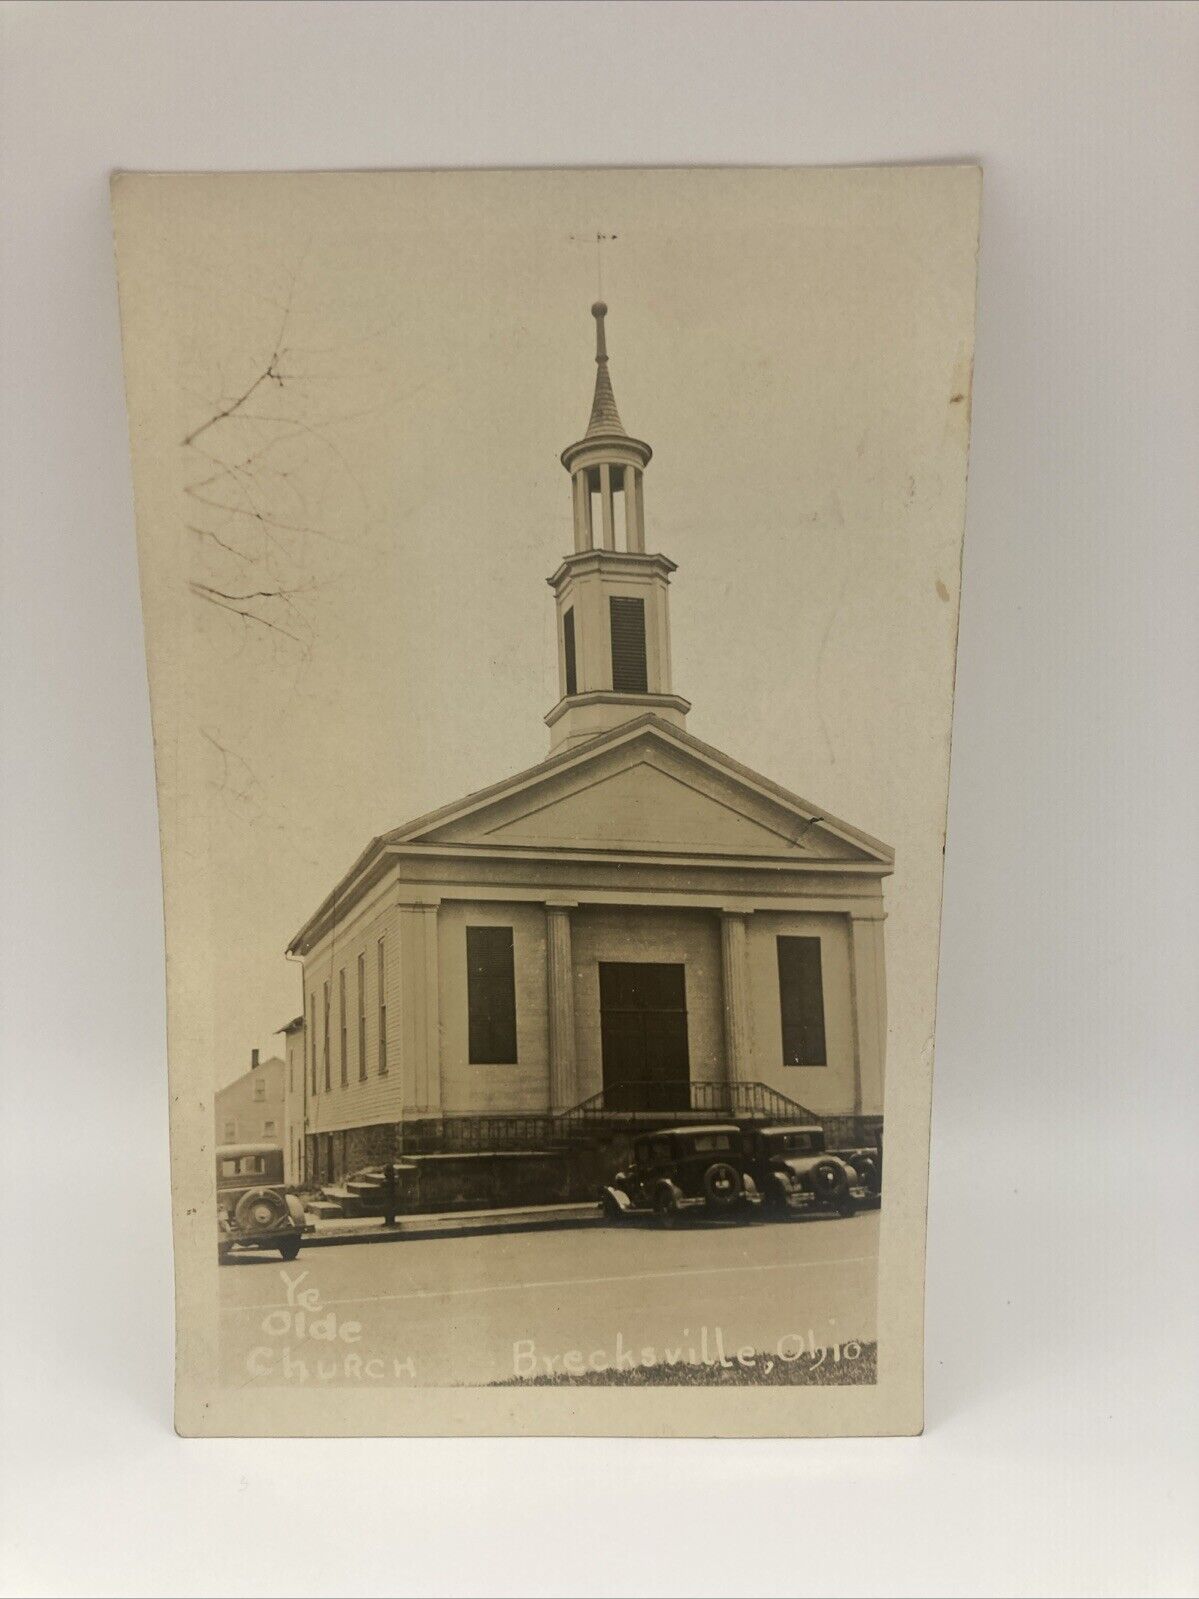 RPPC Postcard Ye Olde Church, Brecksville Ohio